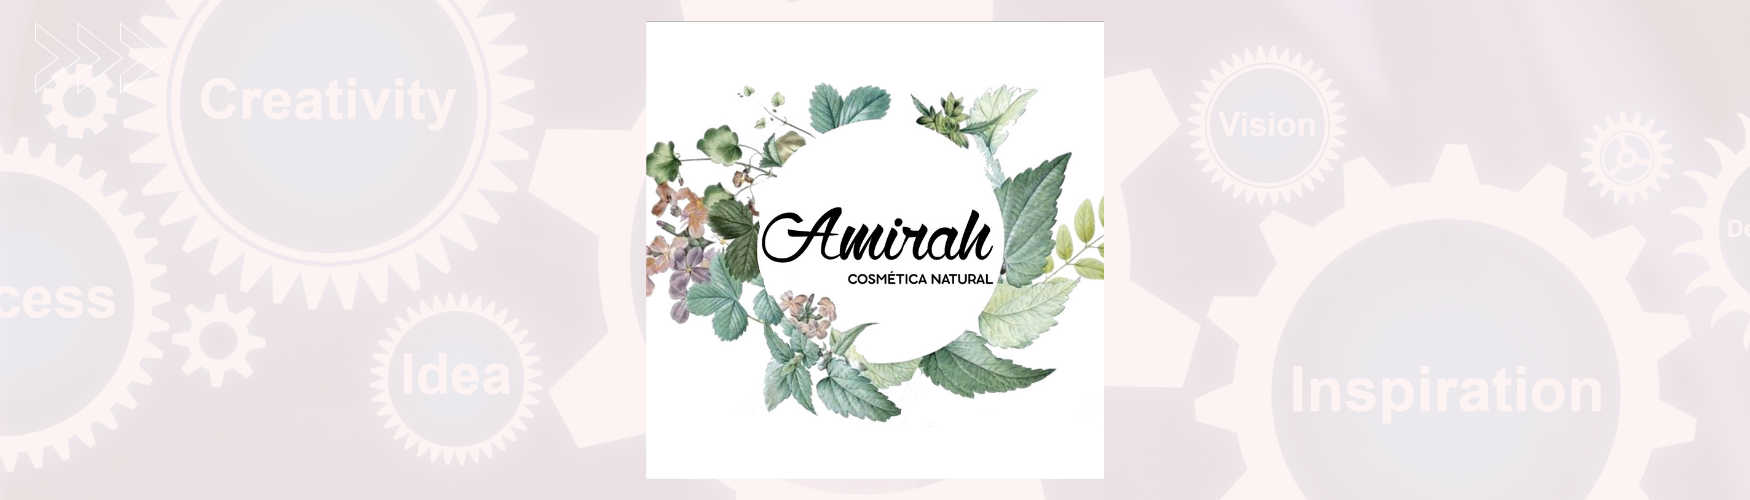 Amirah cosmética natural